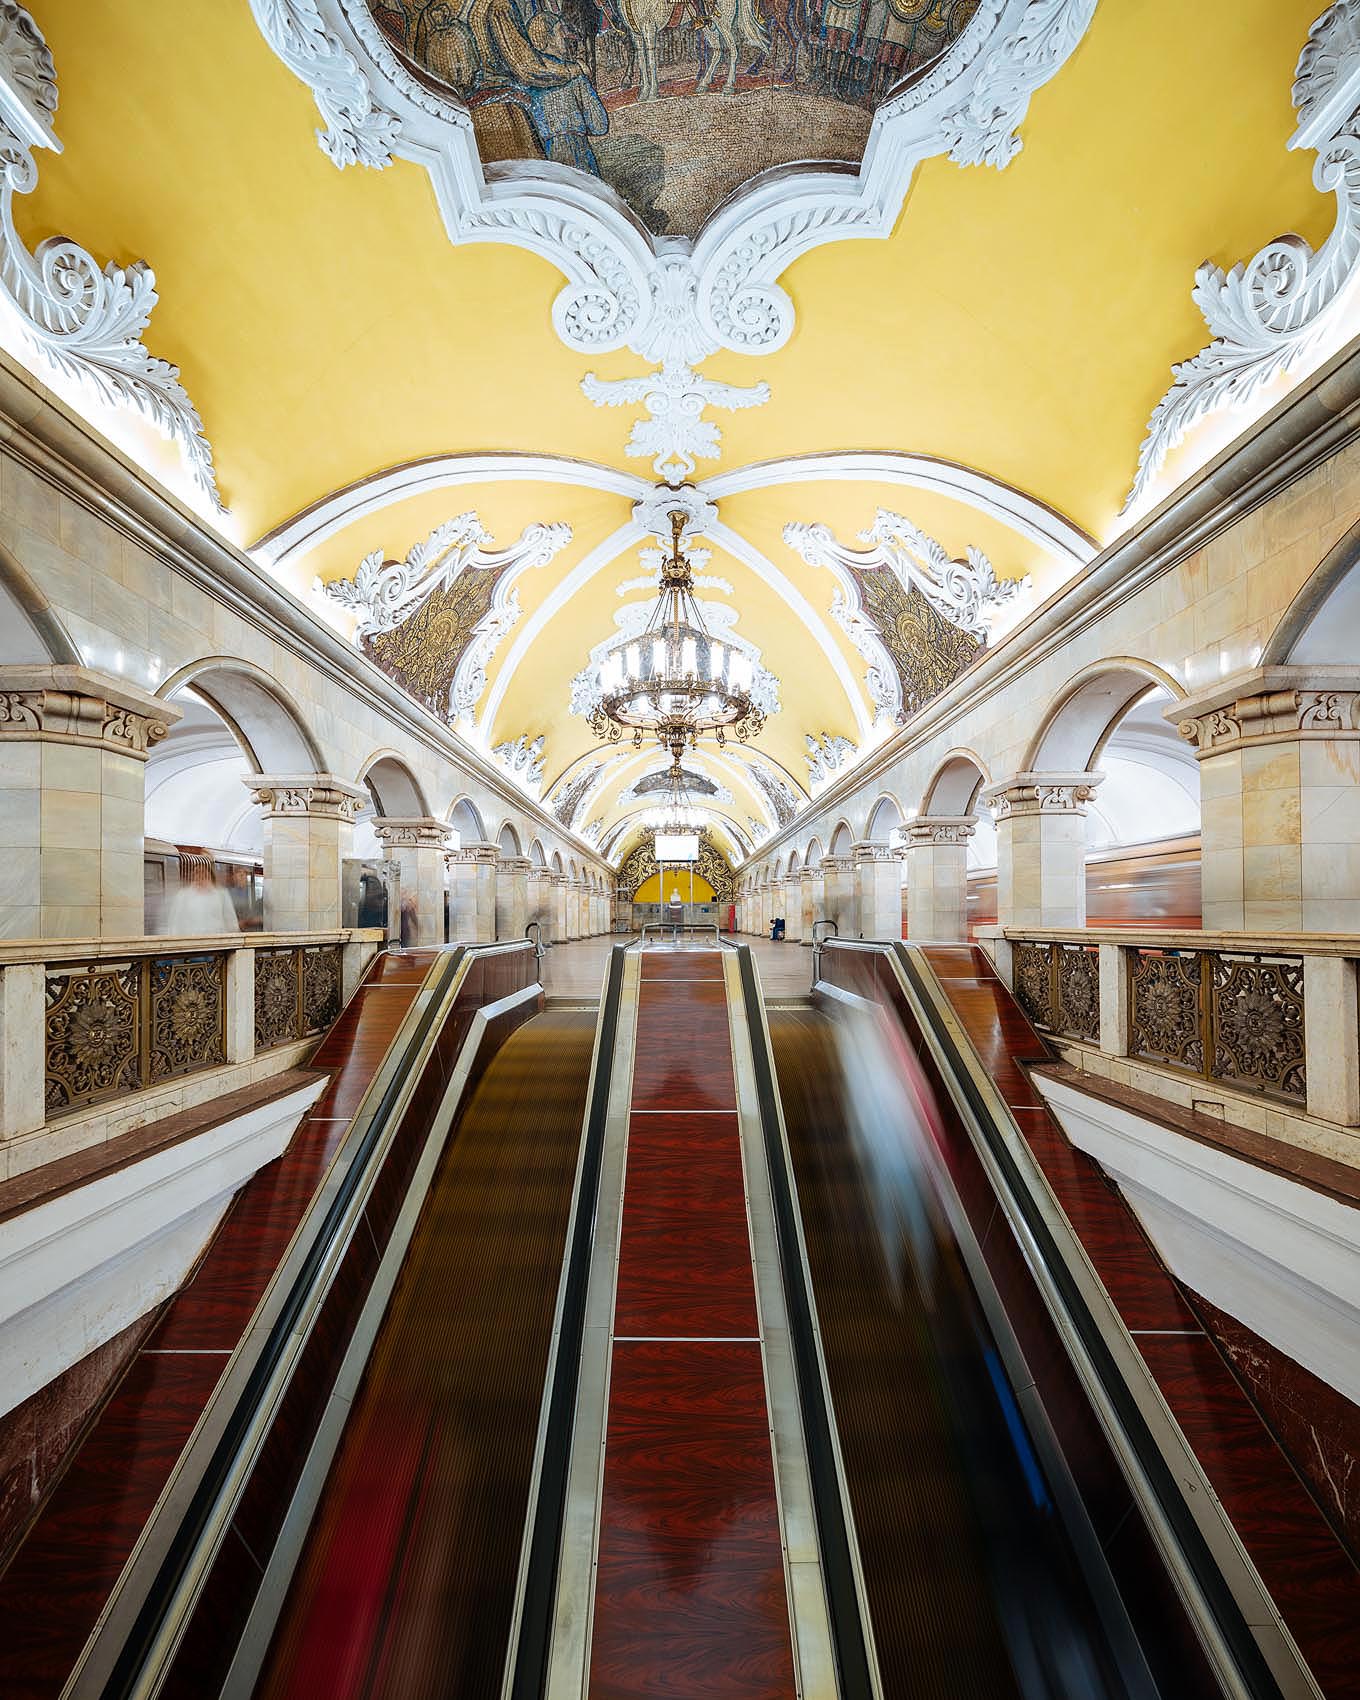 komsomoloskaya-escalator-interior-architecture-metro-station-moscow-russia